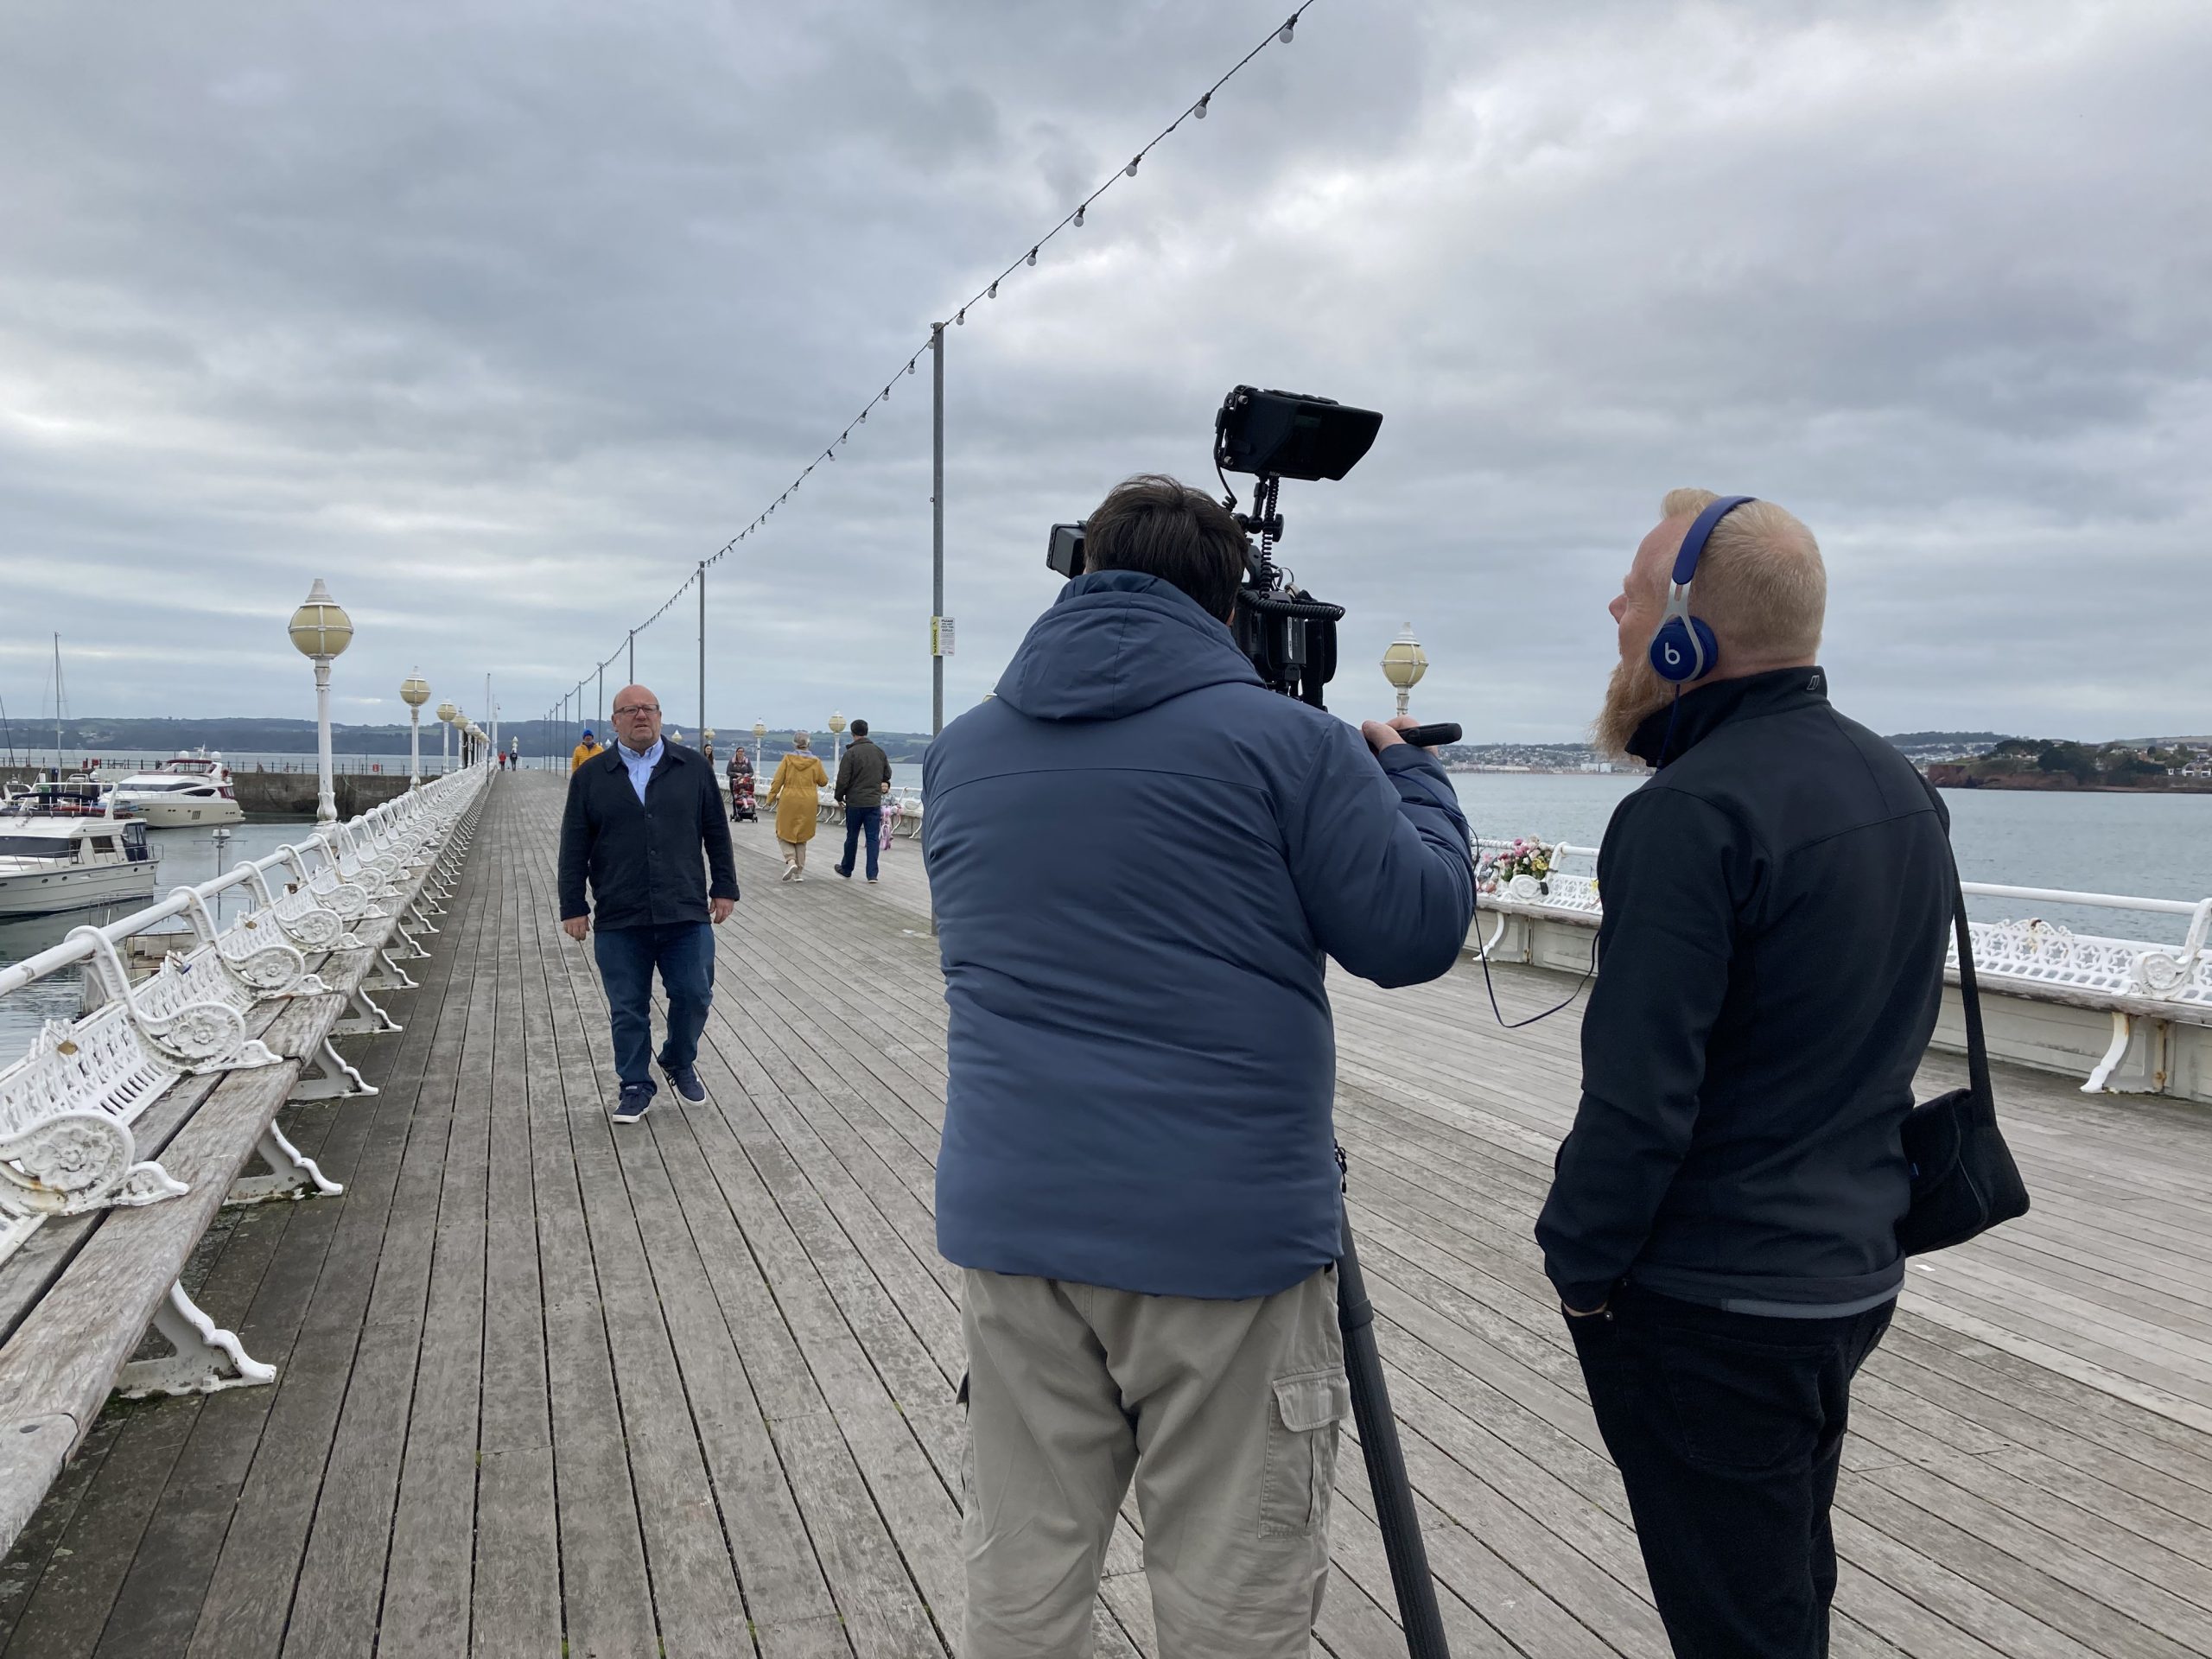 two men filming a male walking down a pier